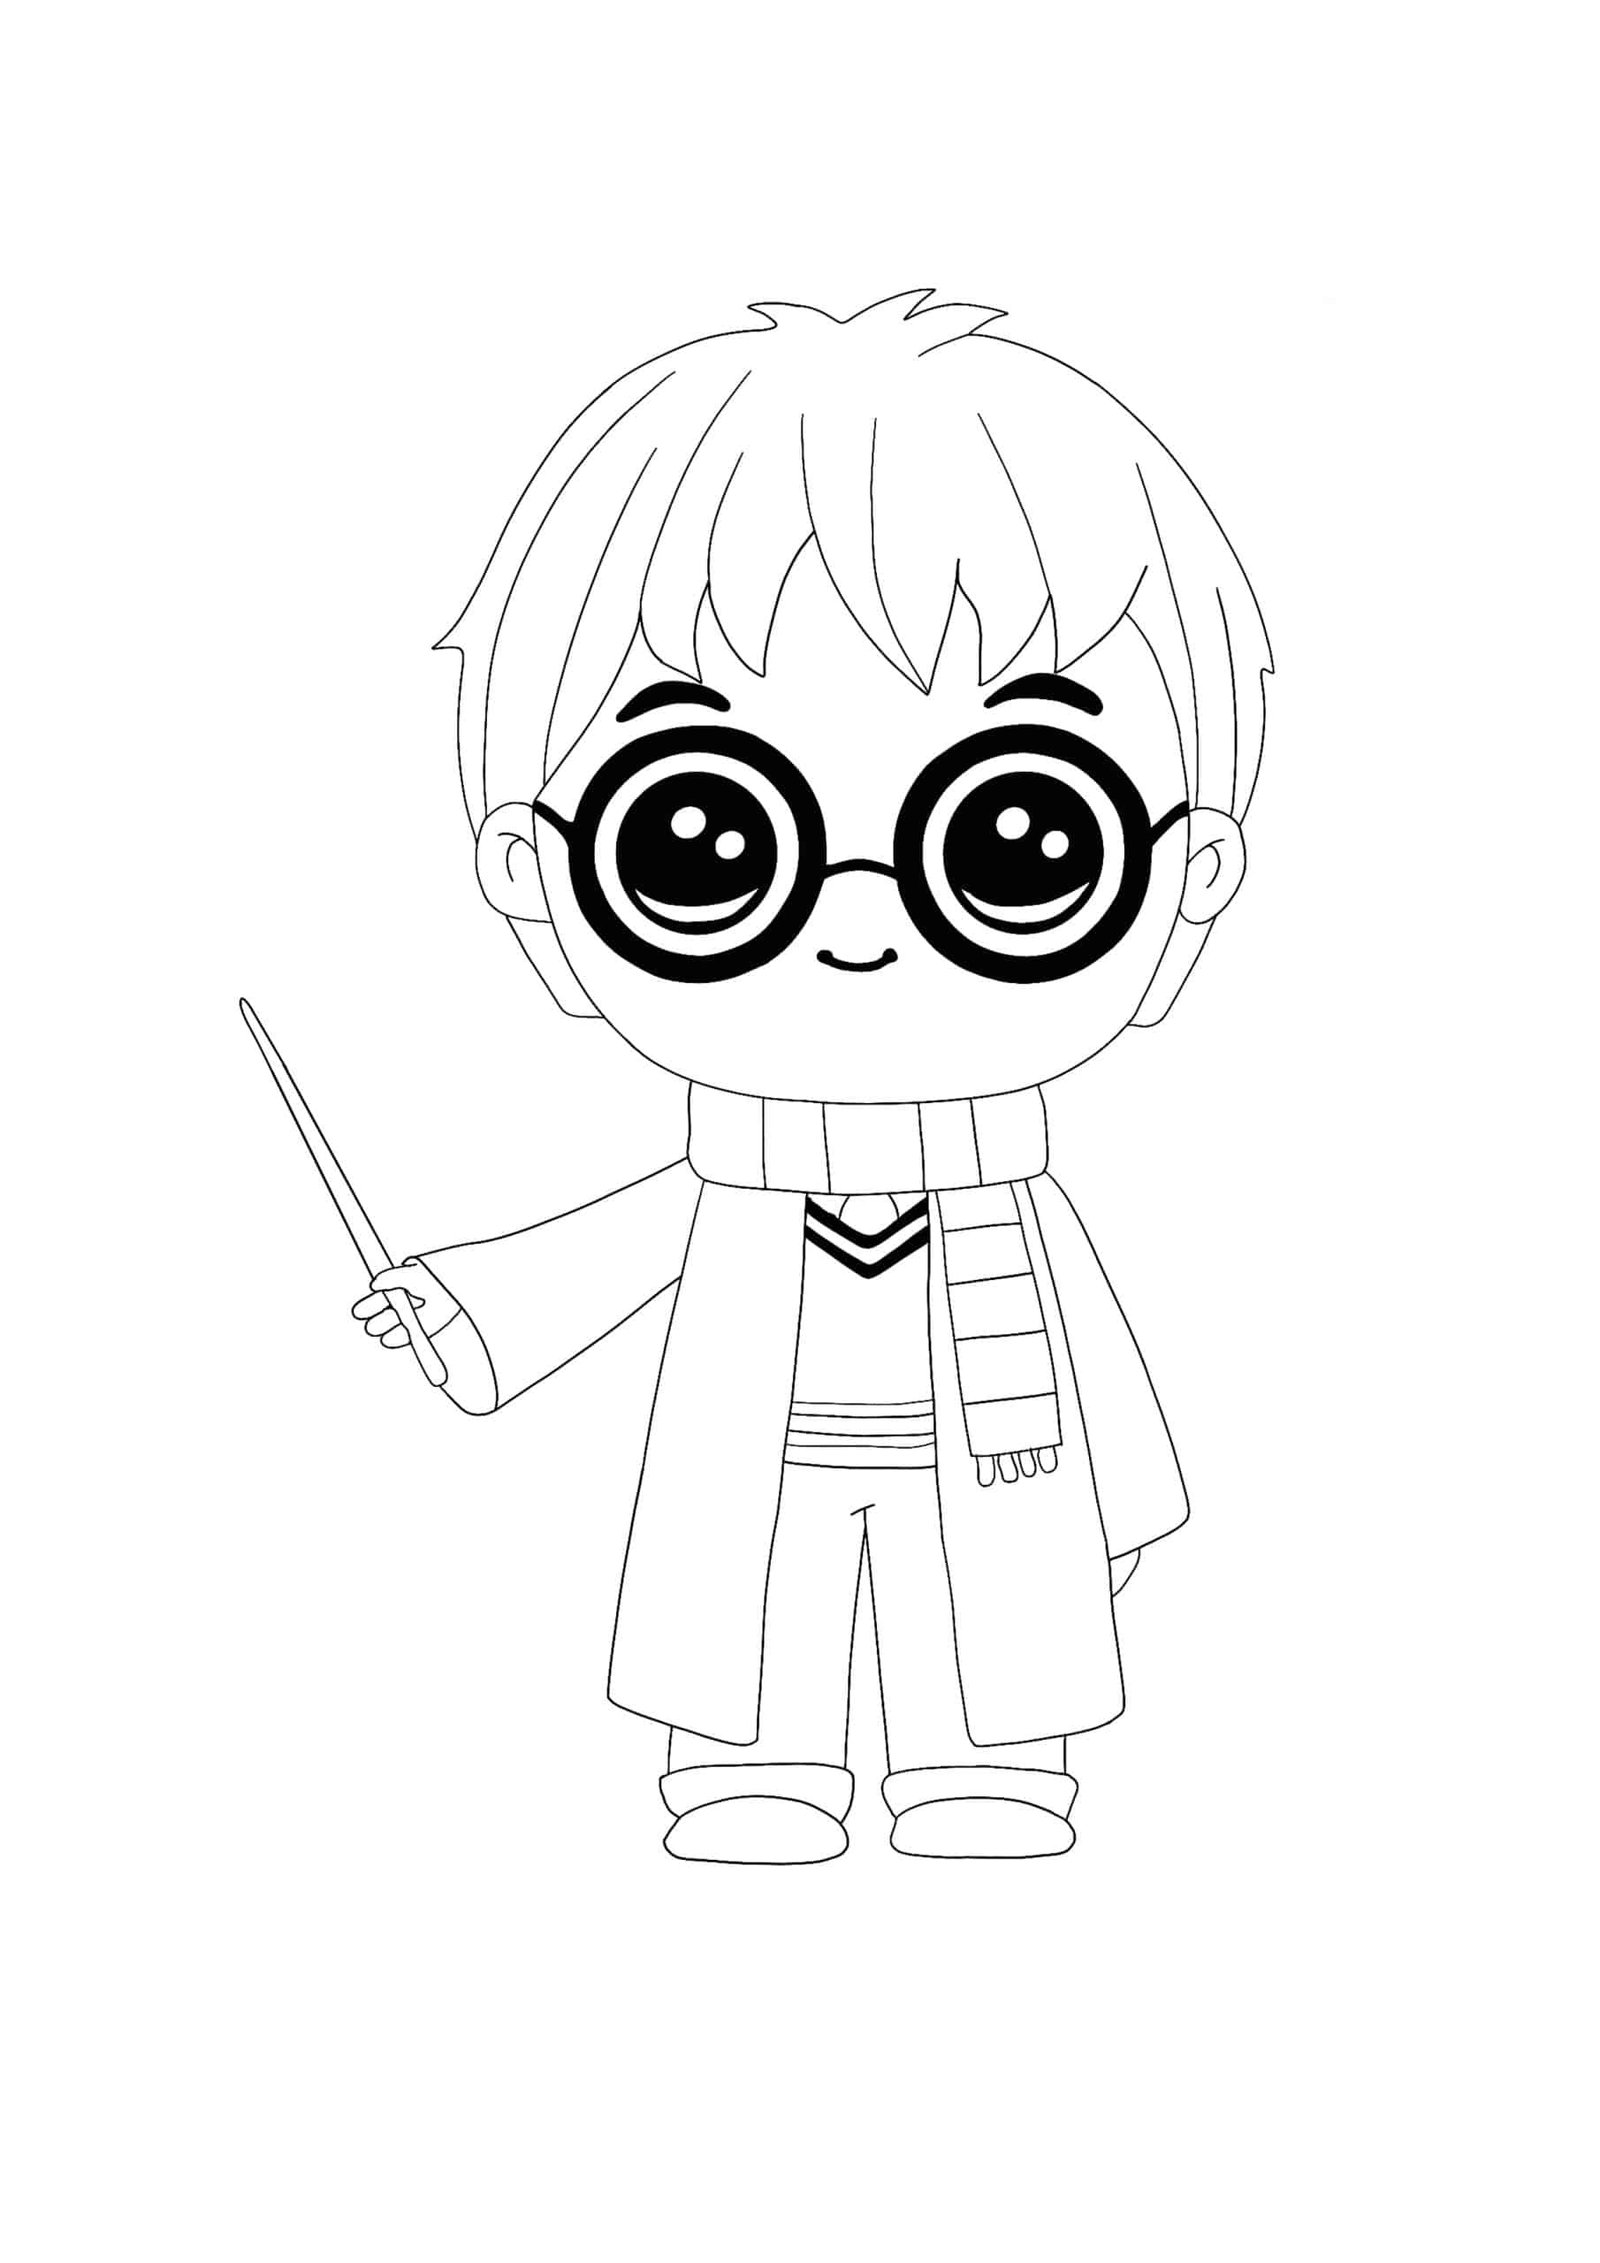 Kawaii Harry Potter coloring page